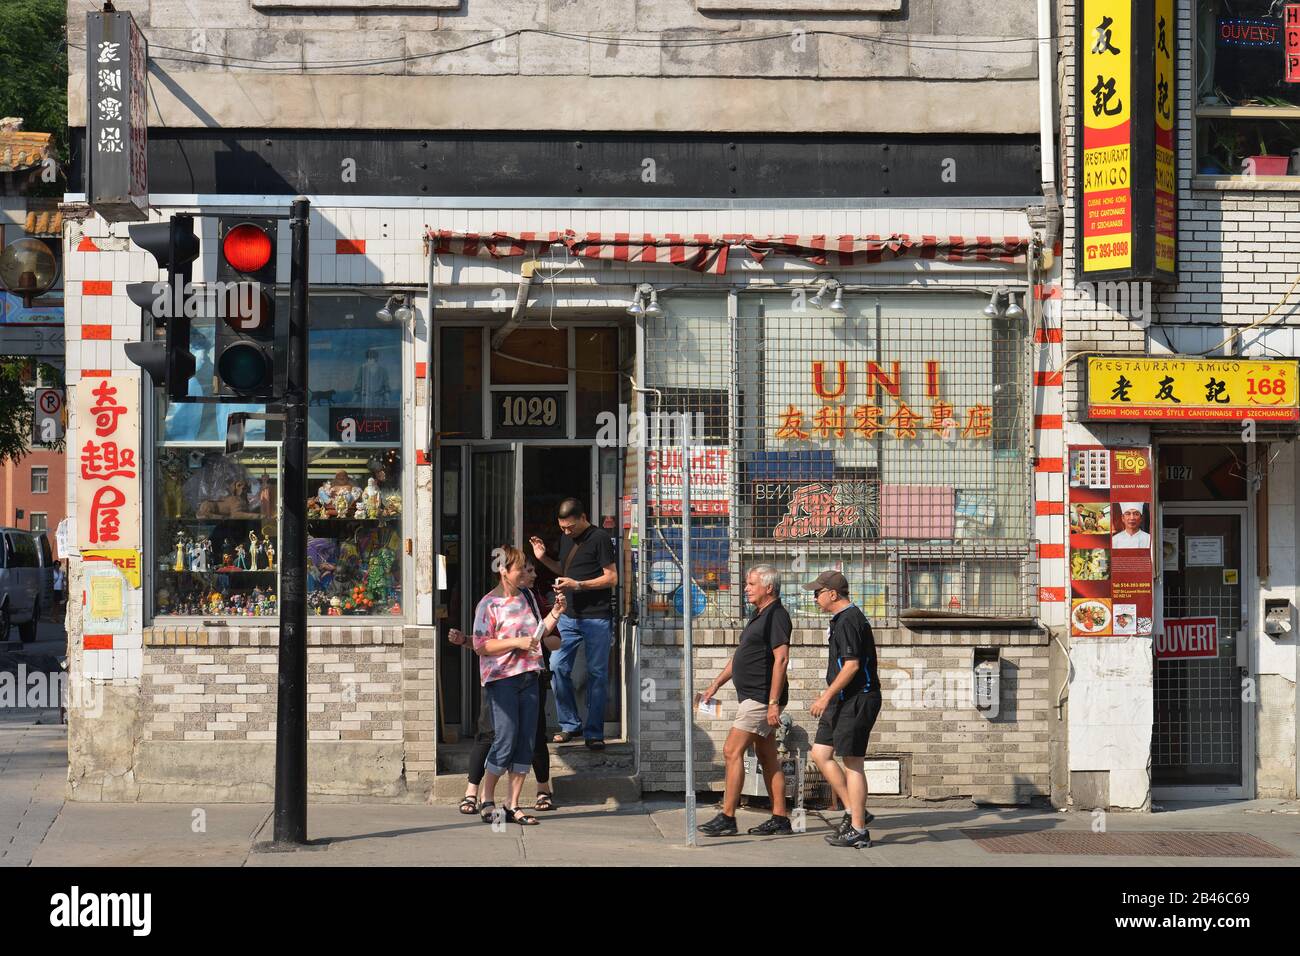 Strassenszene, Chinatown, Montreal, Quebec, Kanada Foto Stock